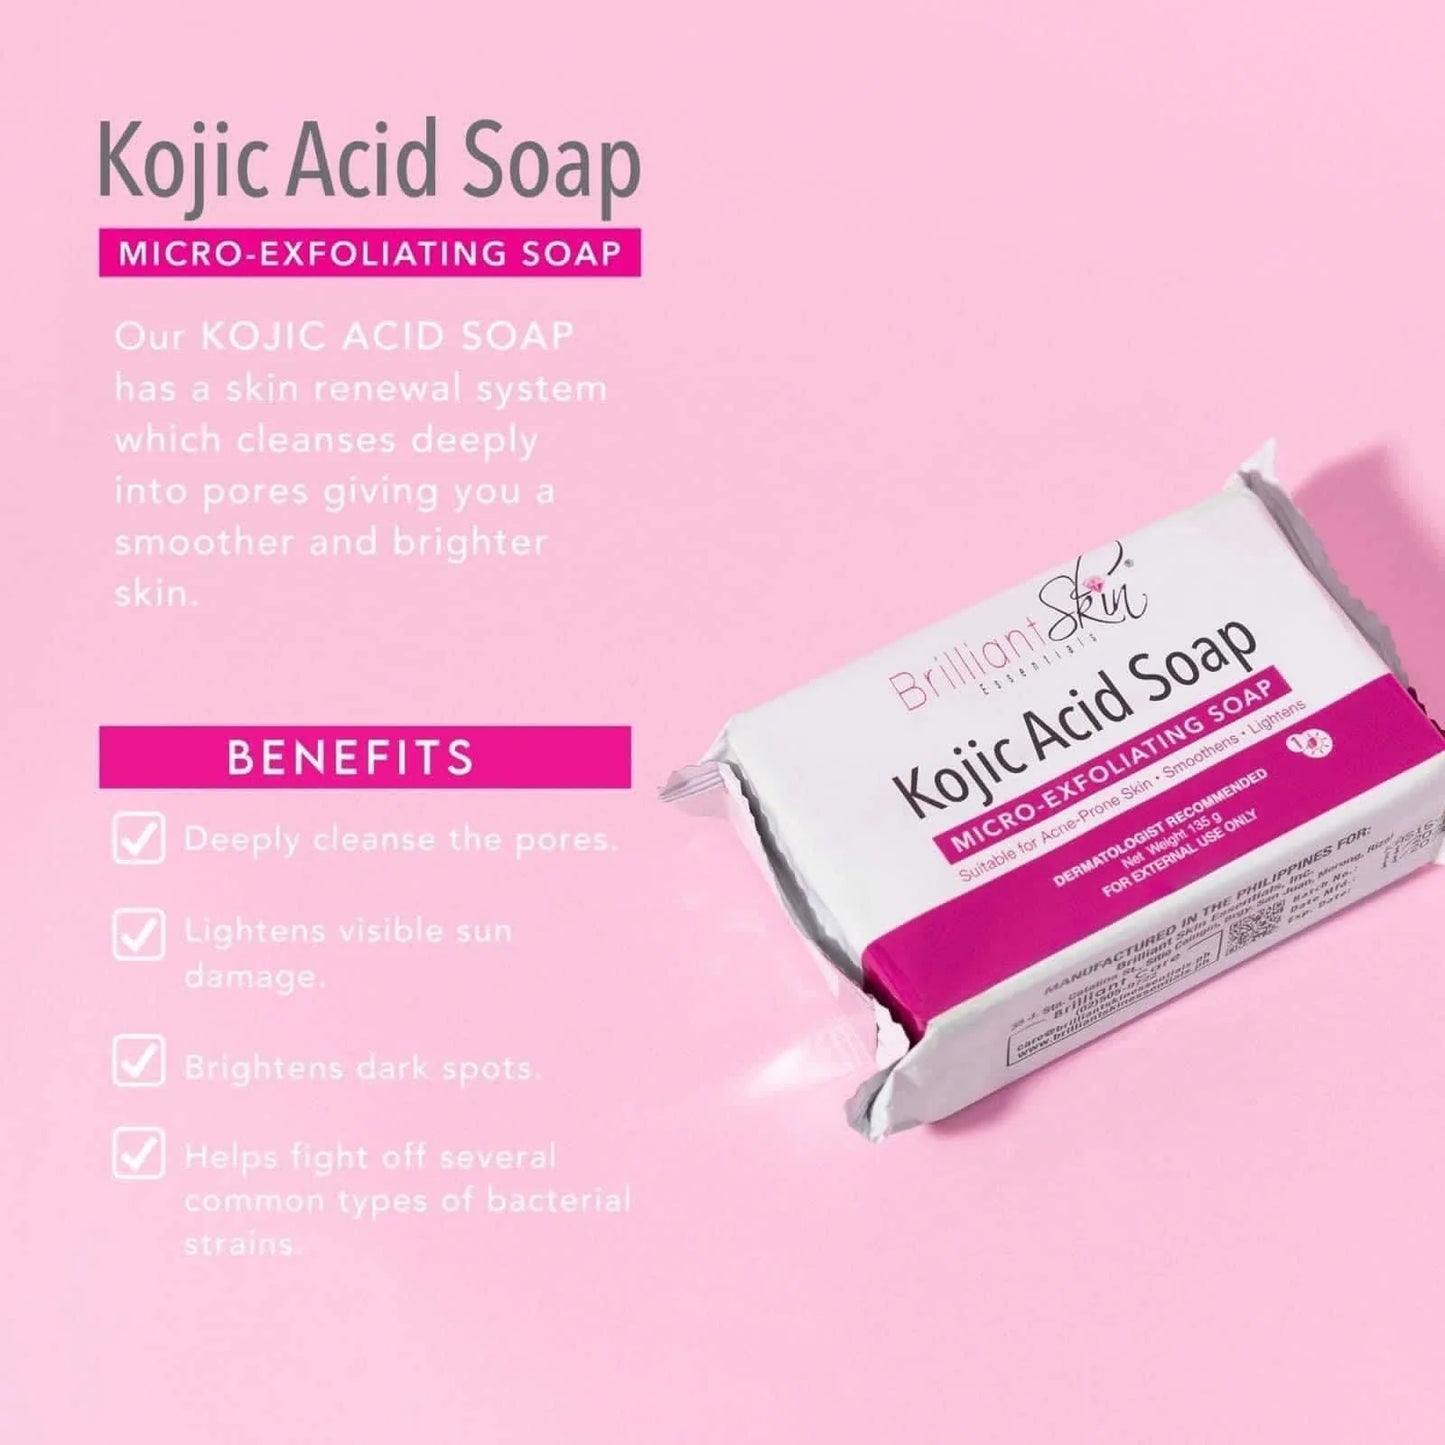 Kojic Acid Soap (Micro Exfoliating Soap)